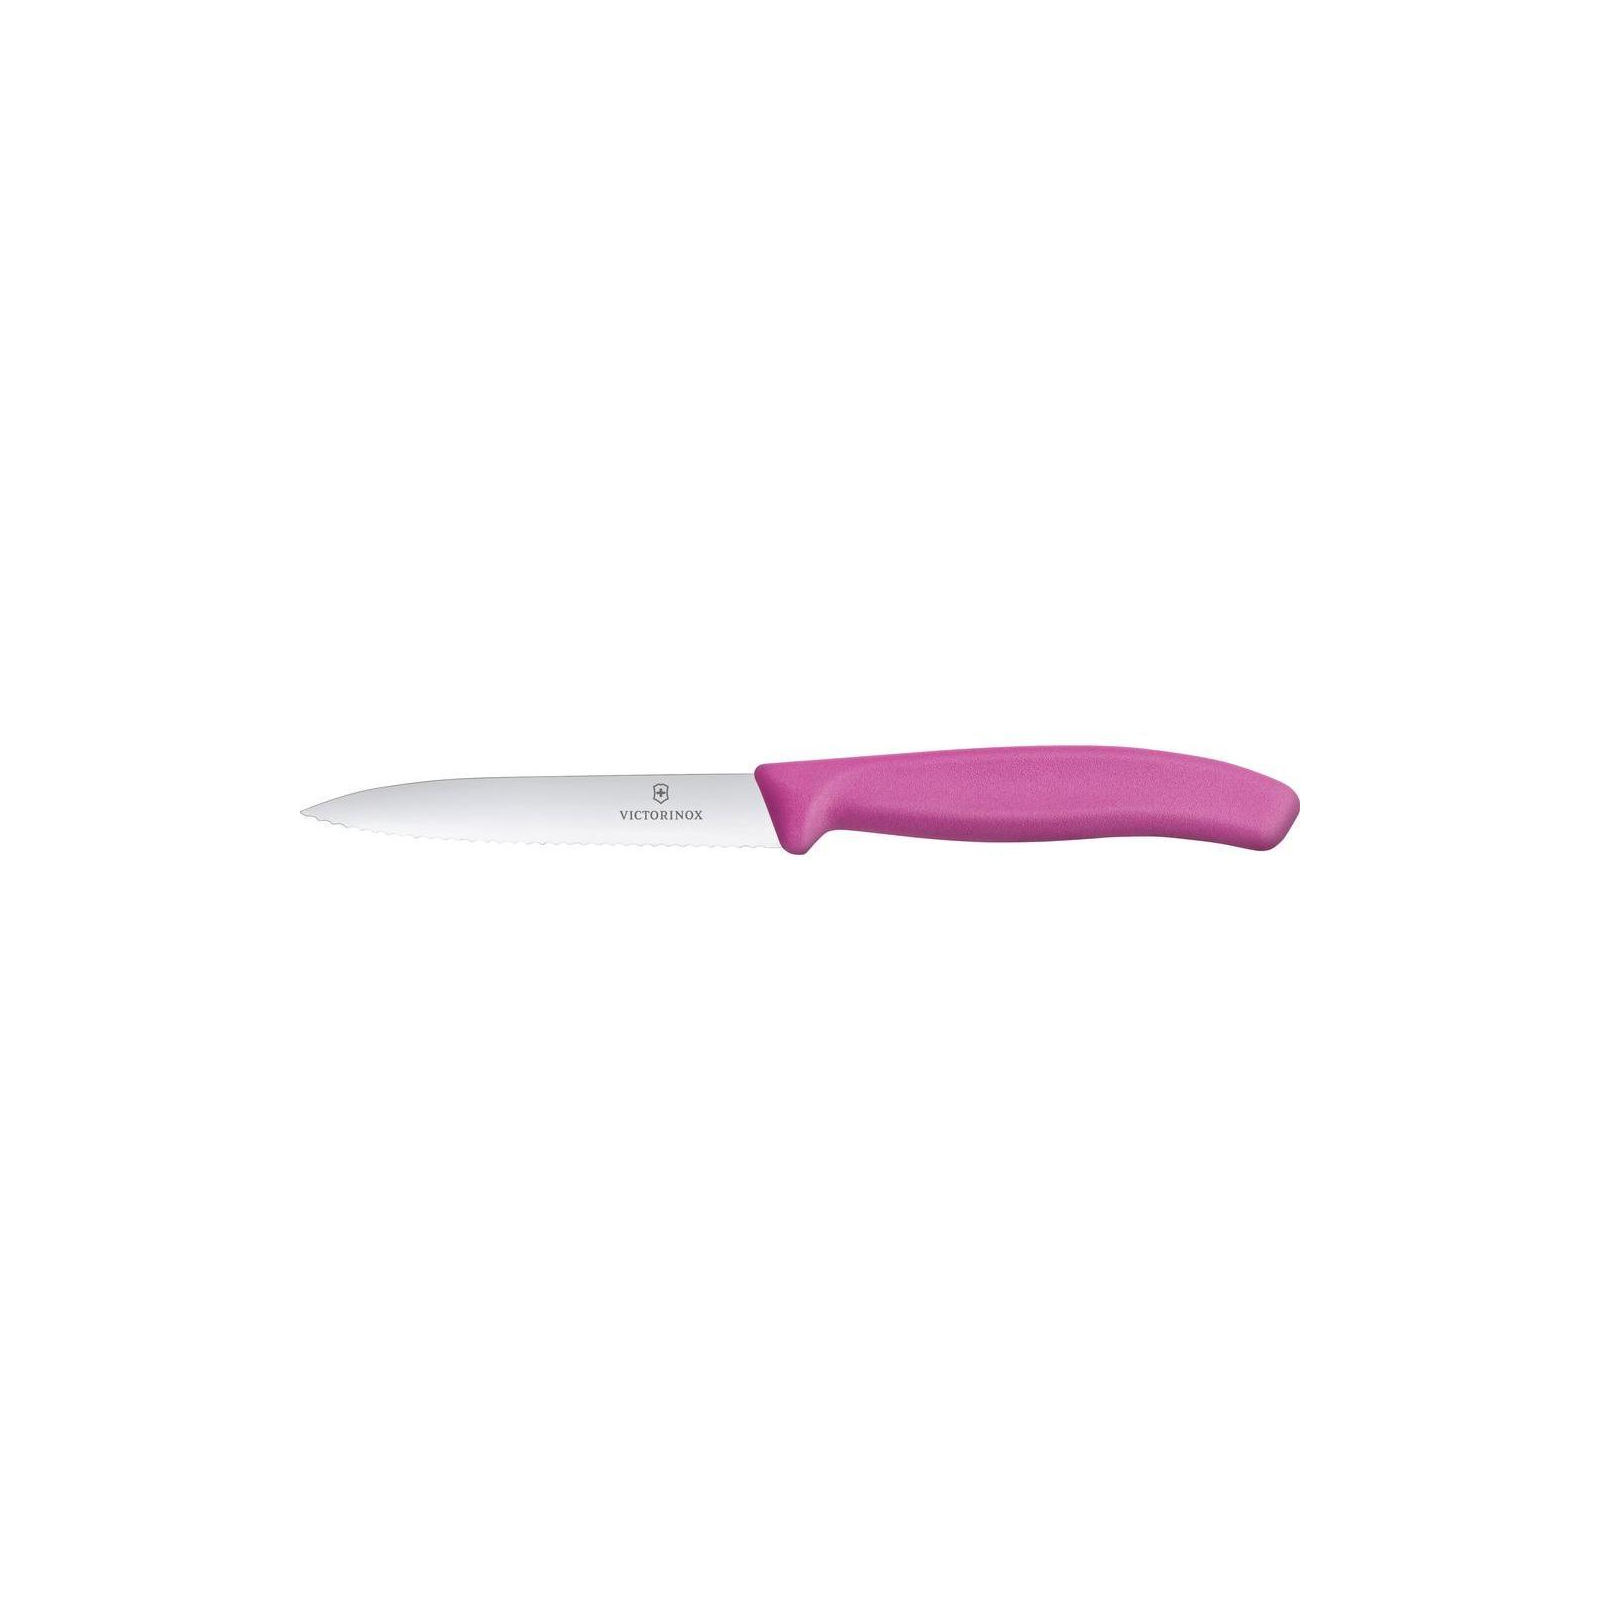 Кухонный нож Victorinox SwissClassic для нарезки 10 см, волнистое лезвие, розовый (6.7736.L5)